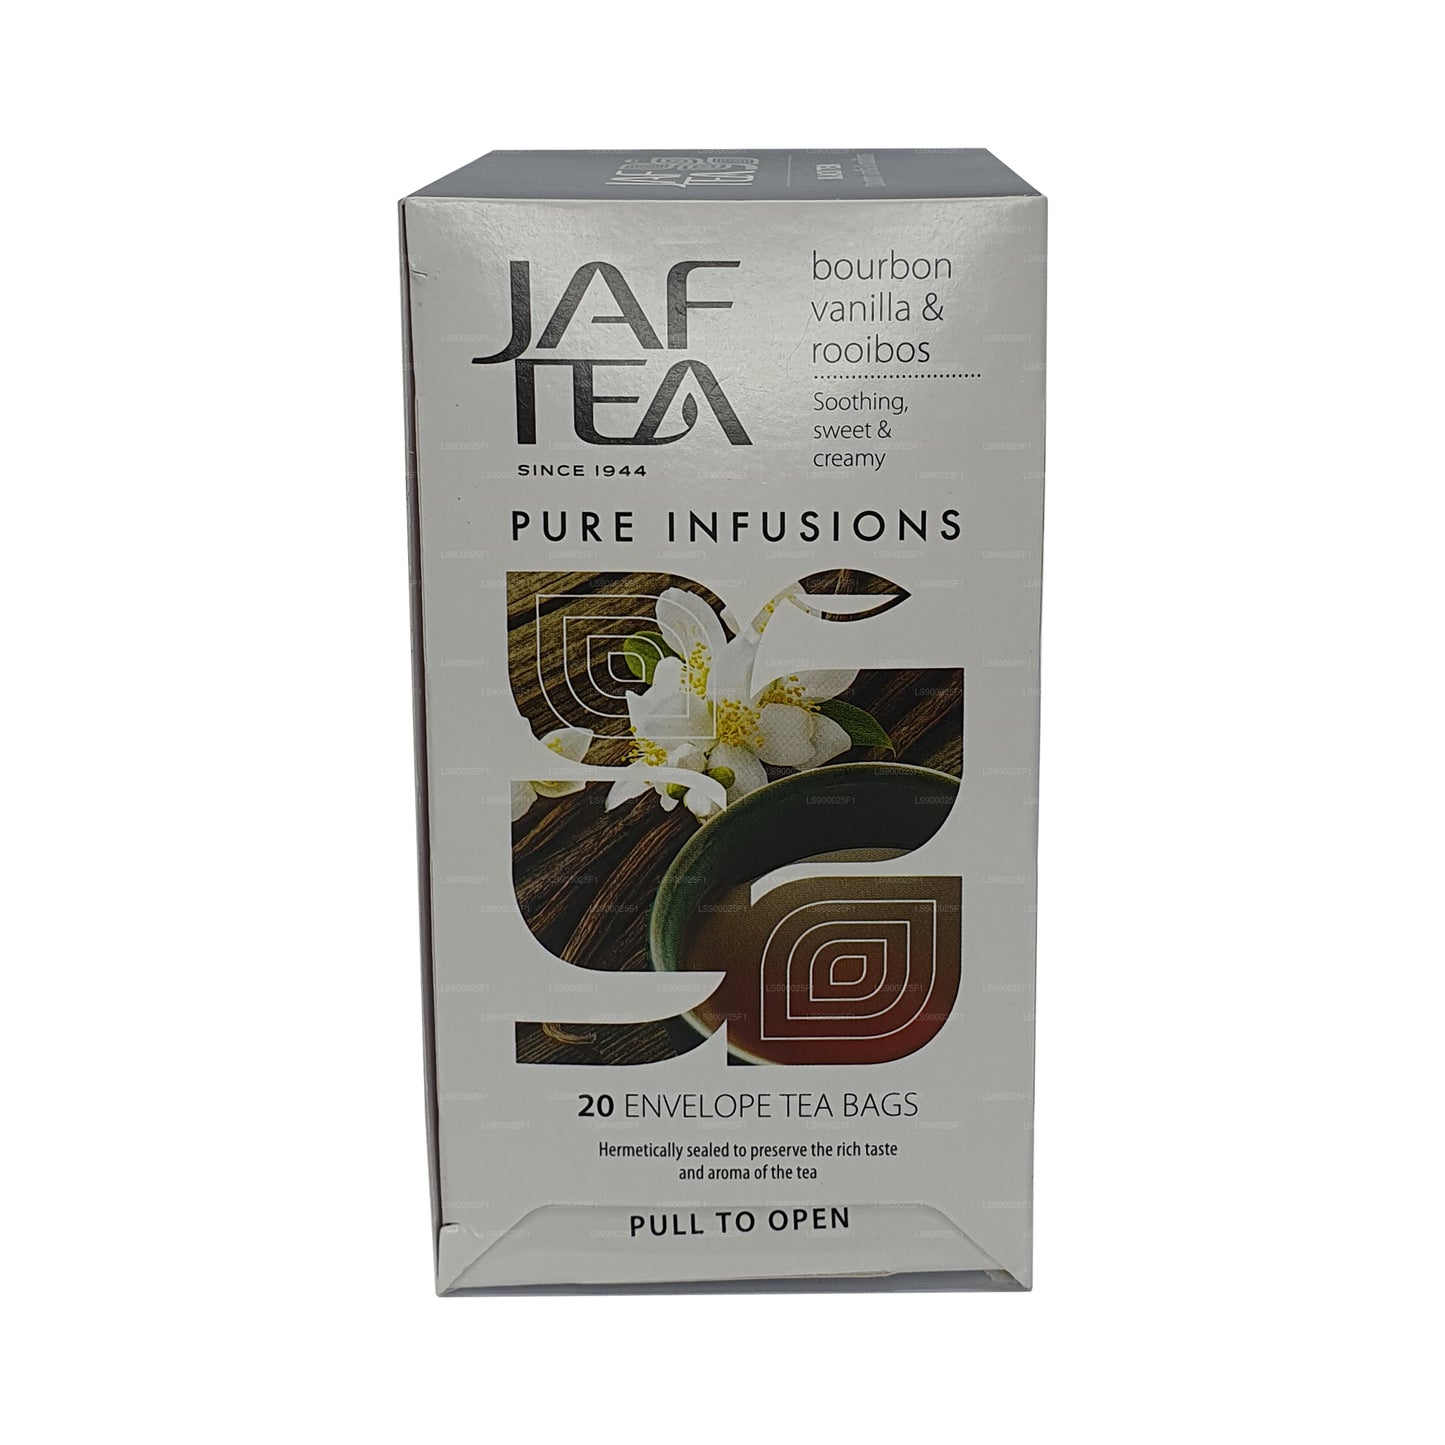 Jaf te rena infusioner samling bourbon vanilj rooibos (30g) 20 tepåsar